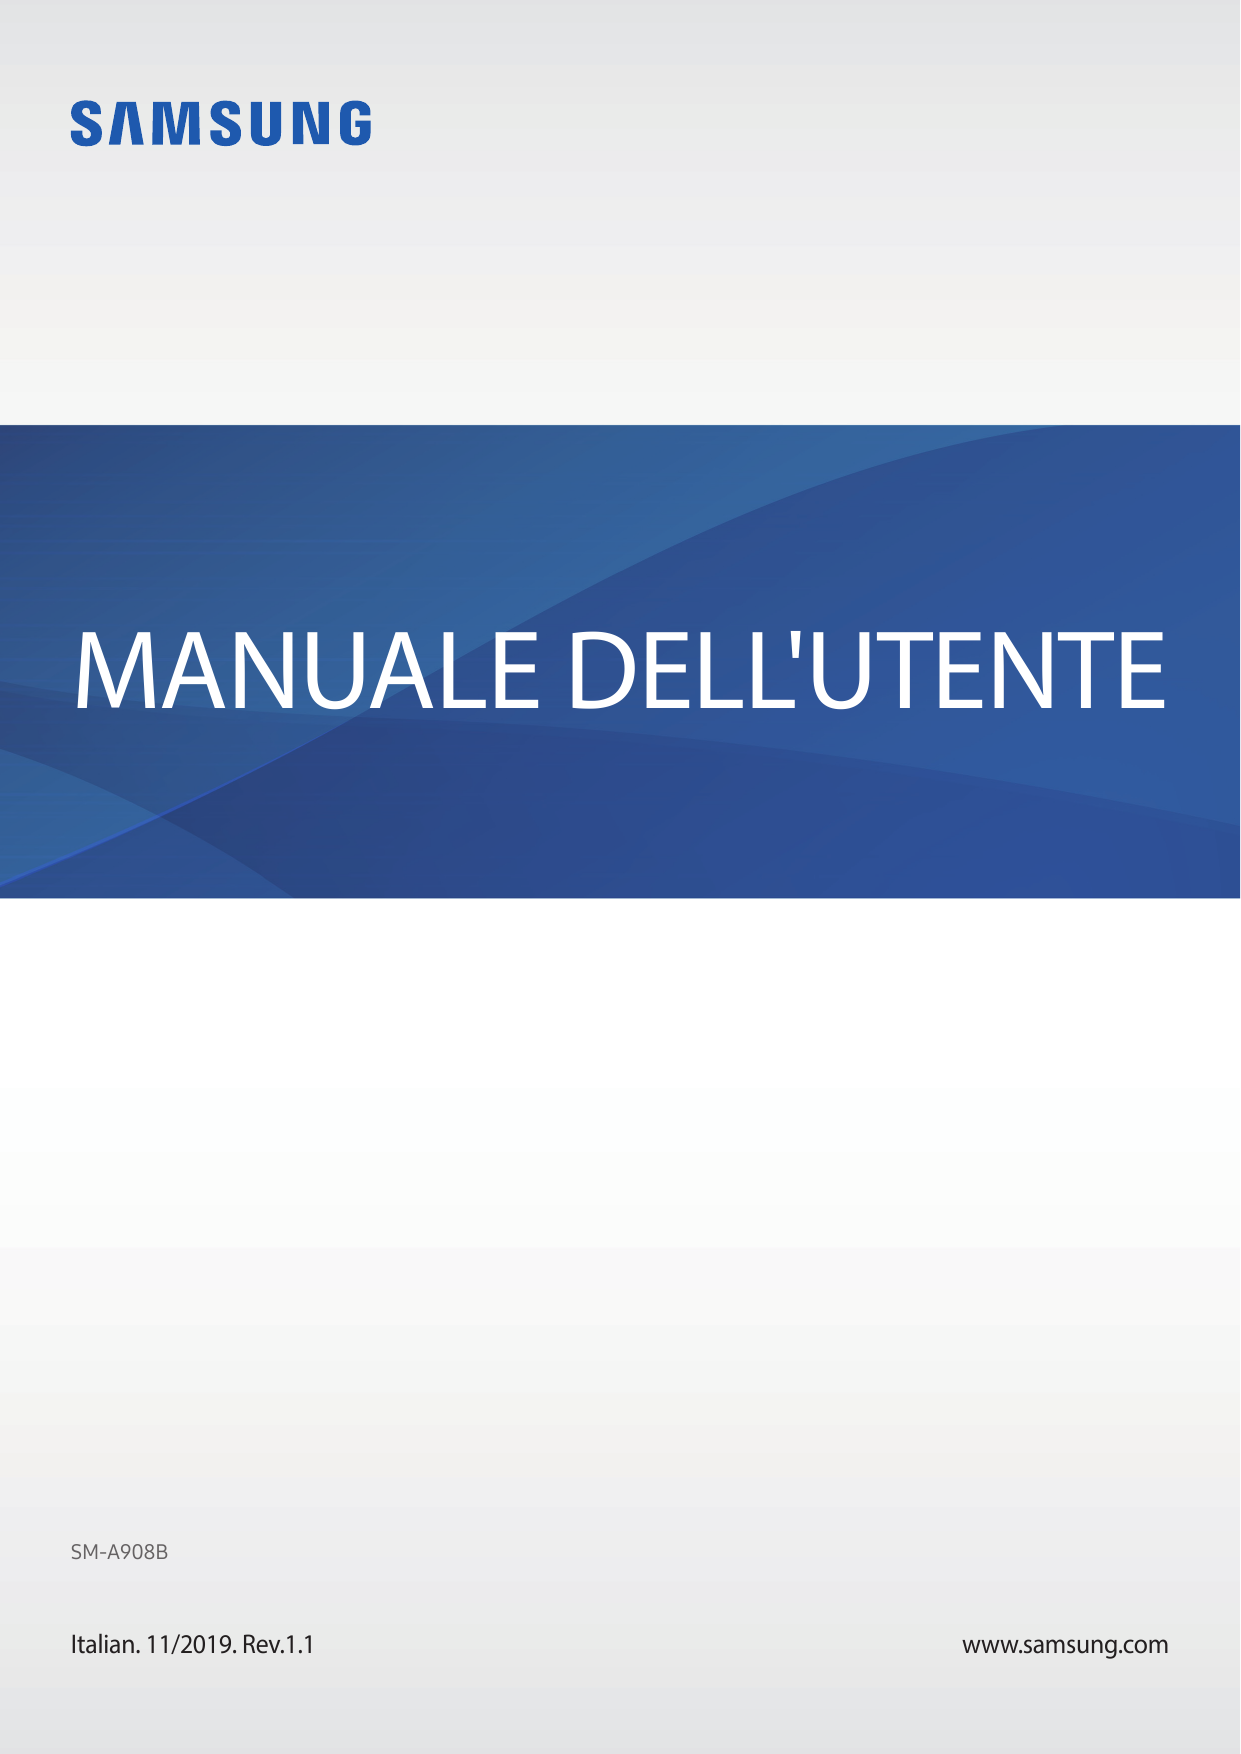 MANUALE DELL'UTENTESM-A908BItalian. 11/2019. Rev.1.1www.samsung.com